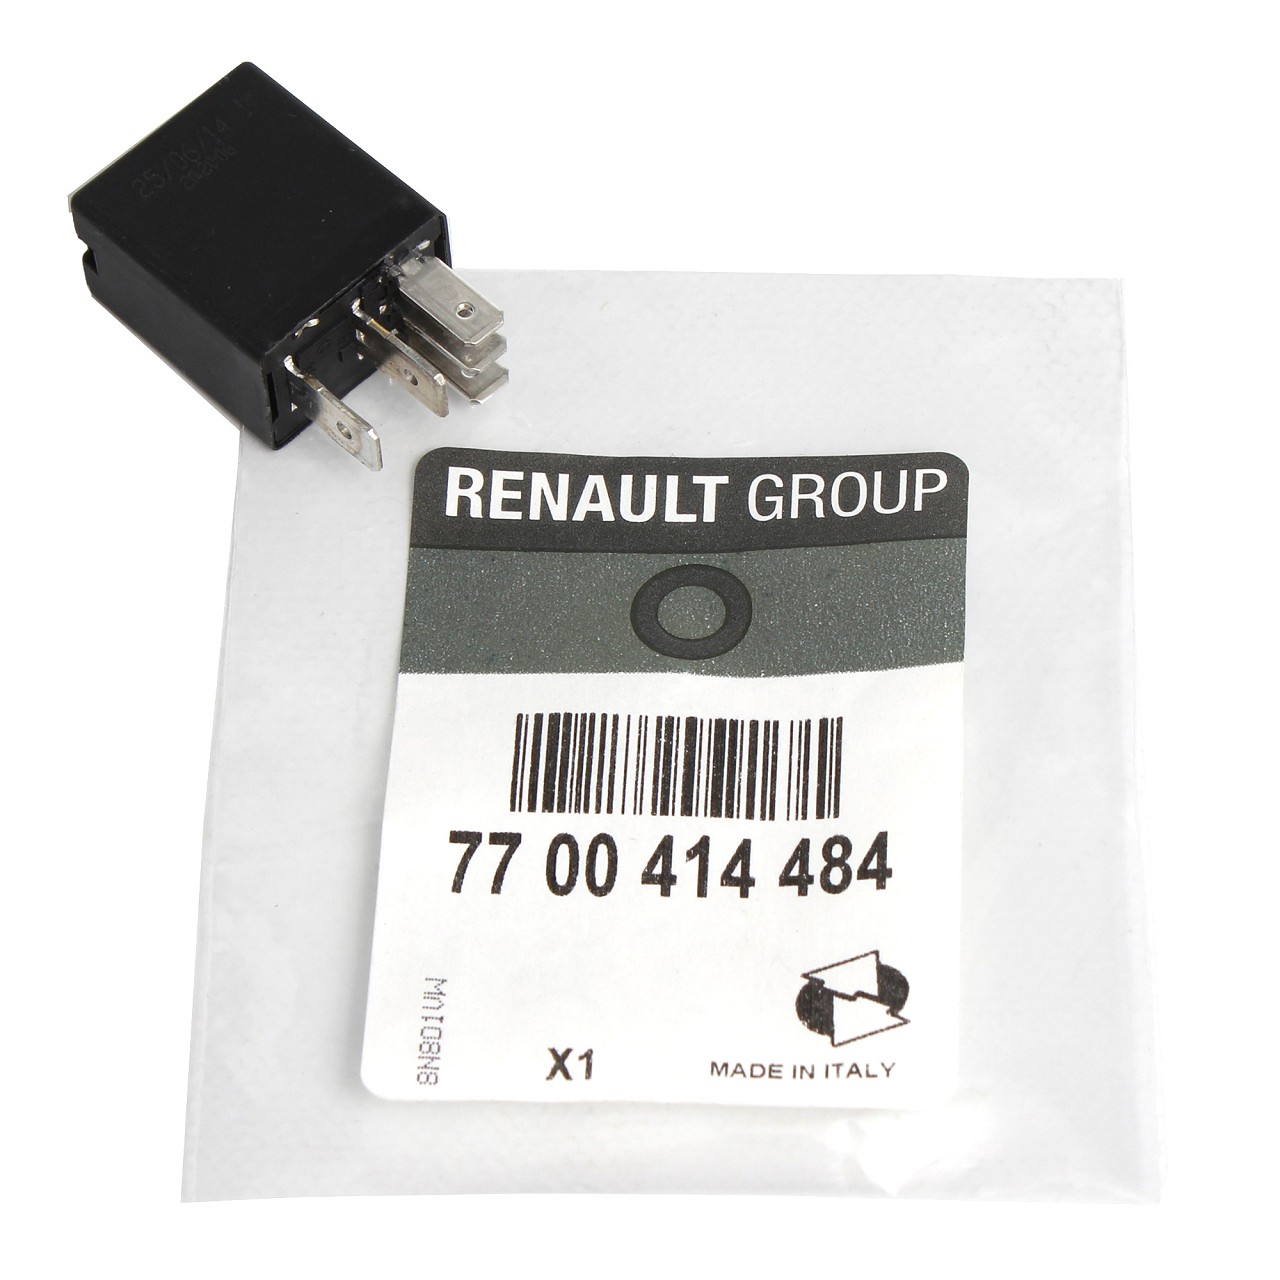 ORIGINAL Renault Relais Kraftstoffpumpe Espace Megane Modus Scenic 7700414484